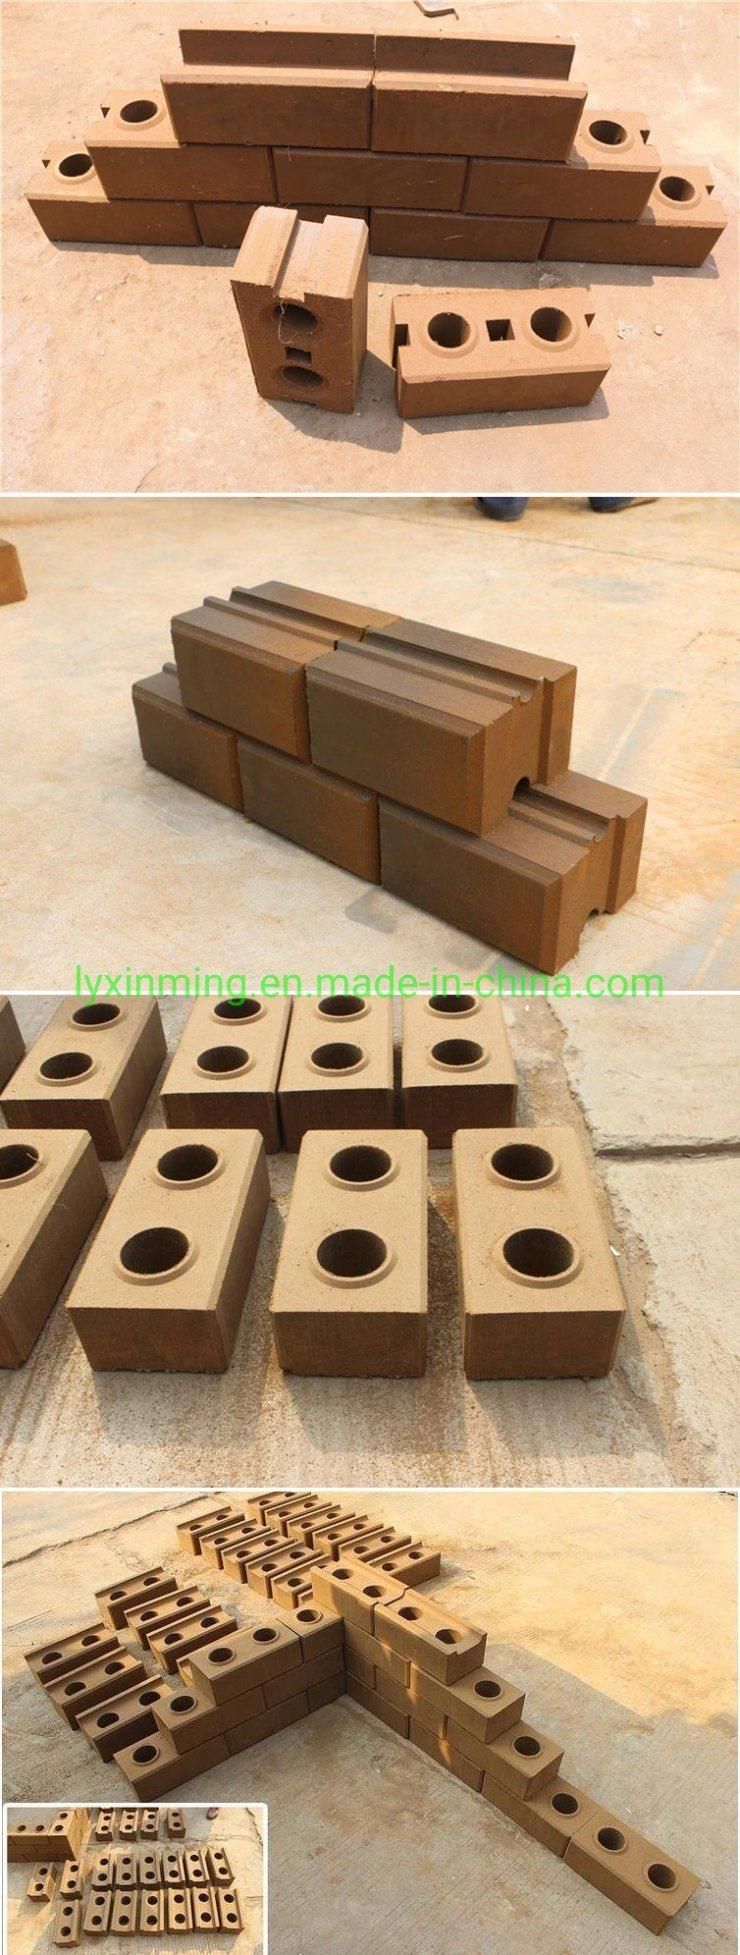 Wide Used Xm2-40 Clay Interlocking Brick Machine Hyfraform Block Making Machine in India